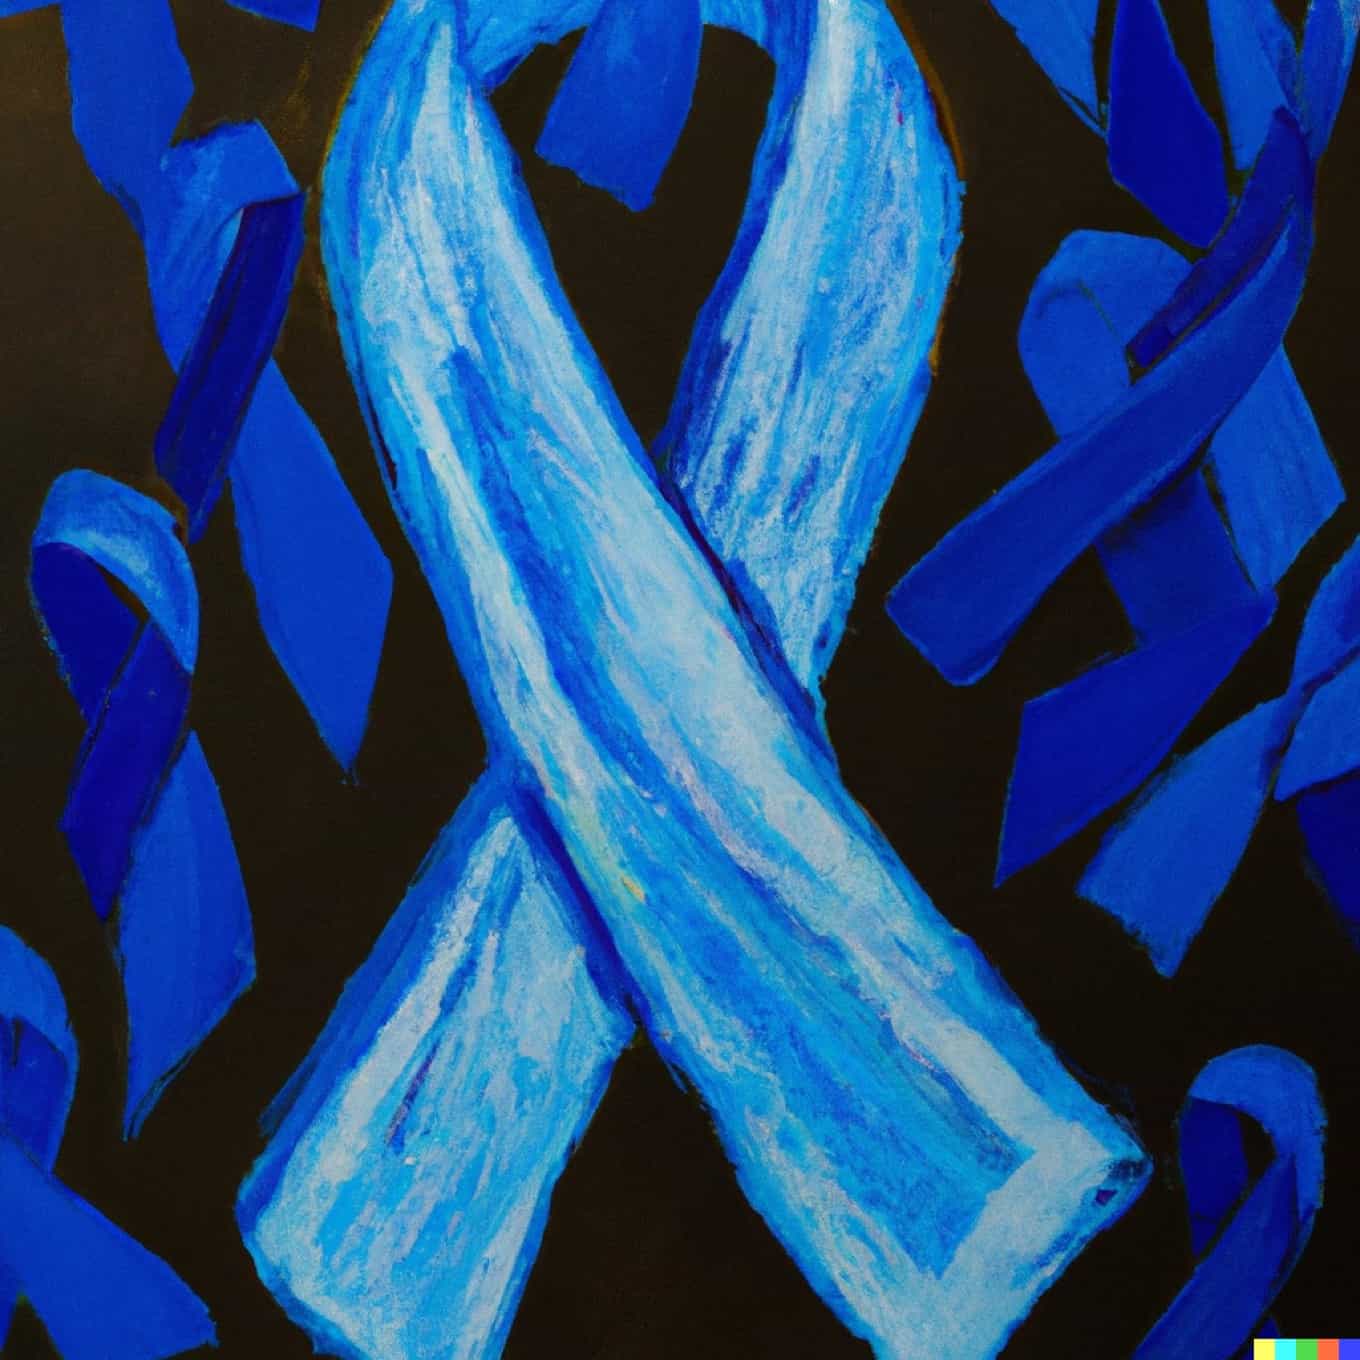 Blue Awareness Ribbon